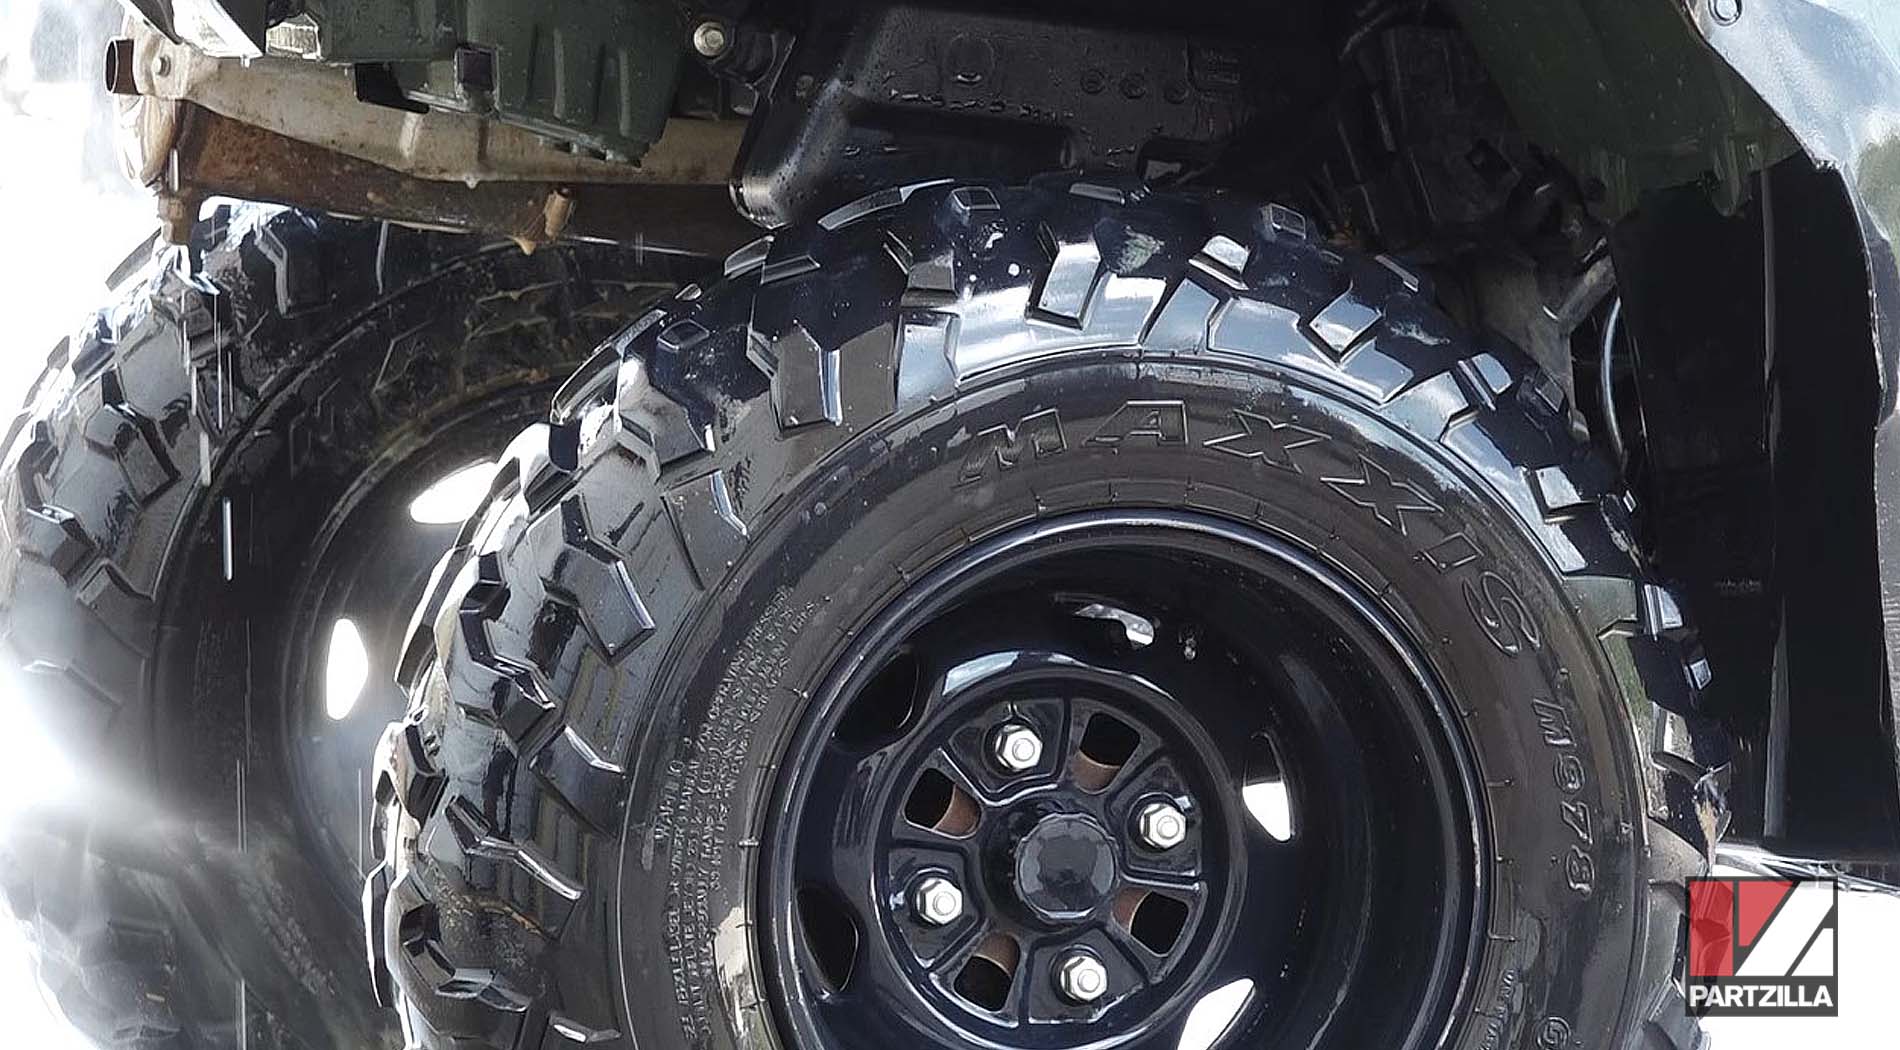 Cleaning muddy ATV tires